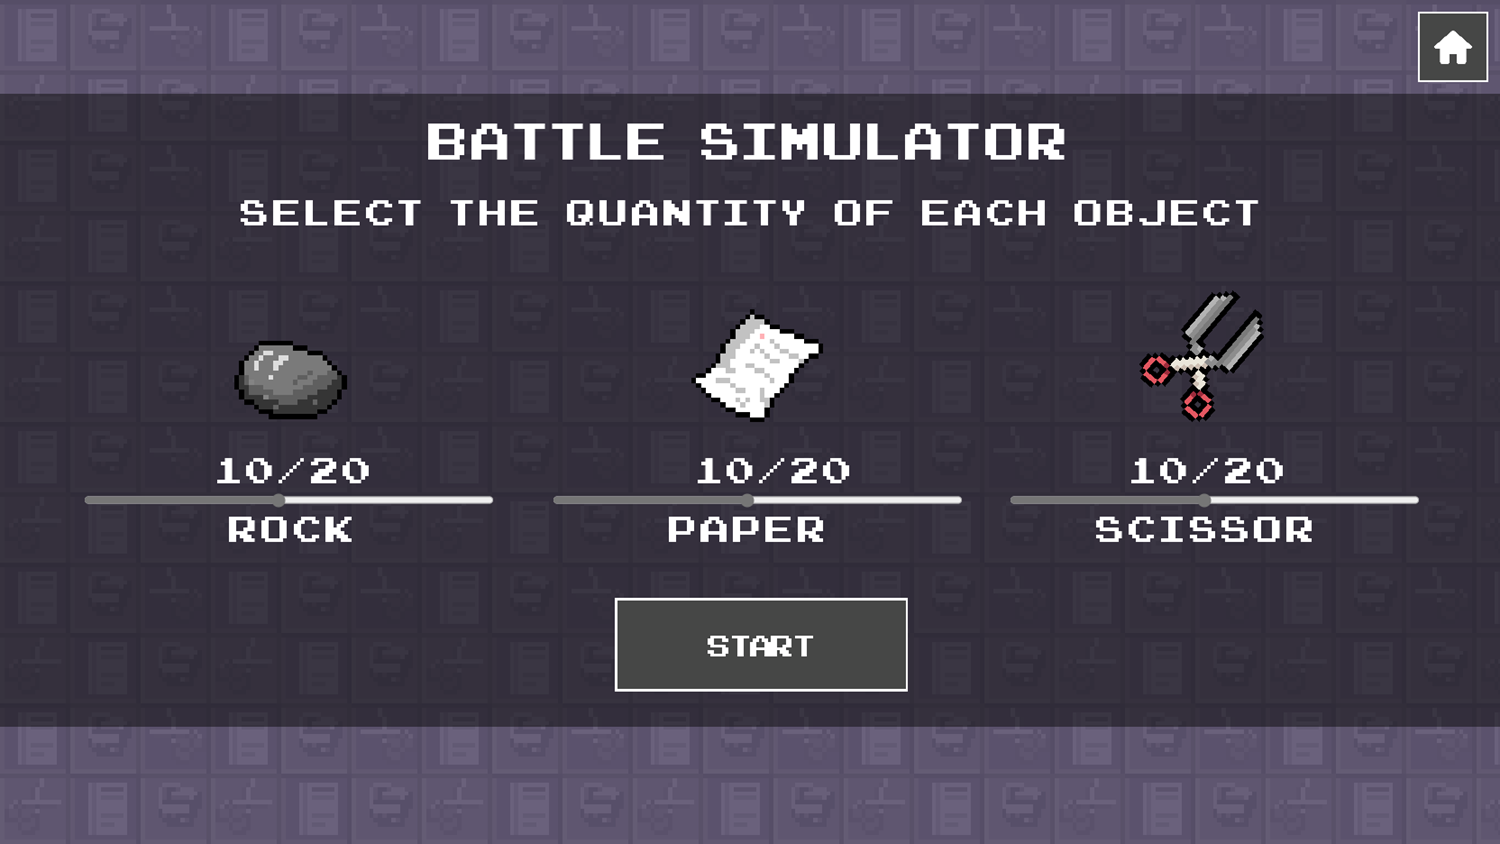 Rock Paper and Scissors Game Battle Simulator Screenshot.